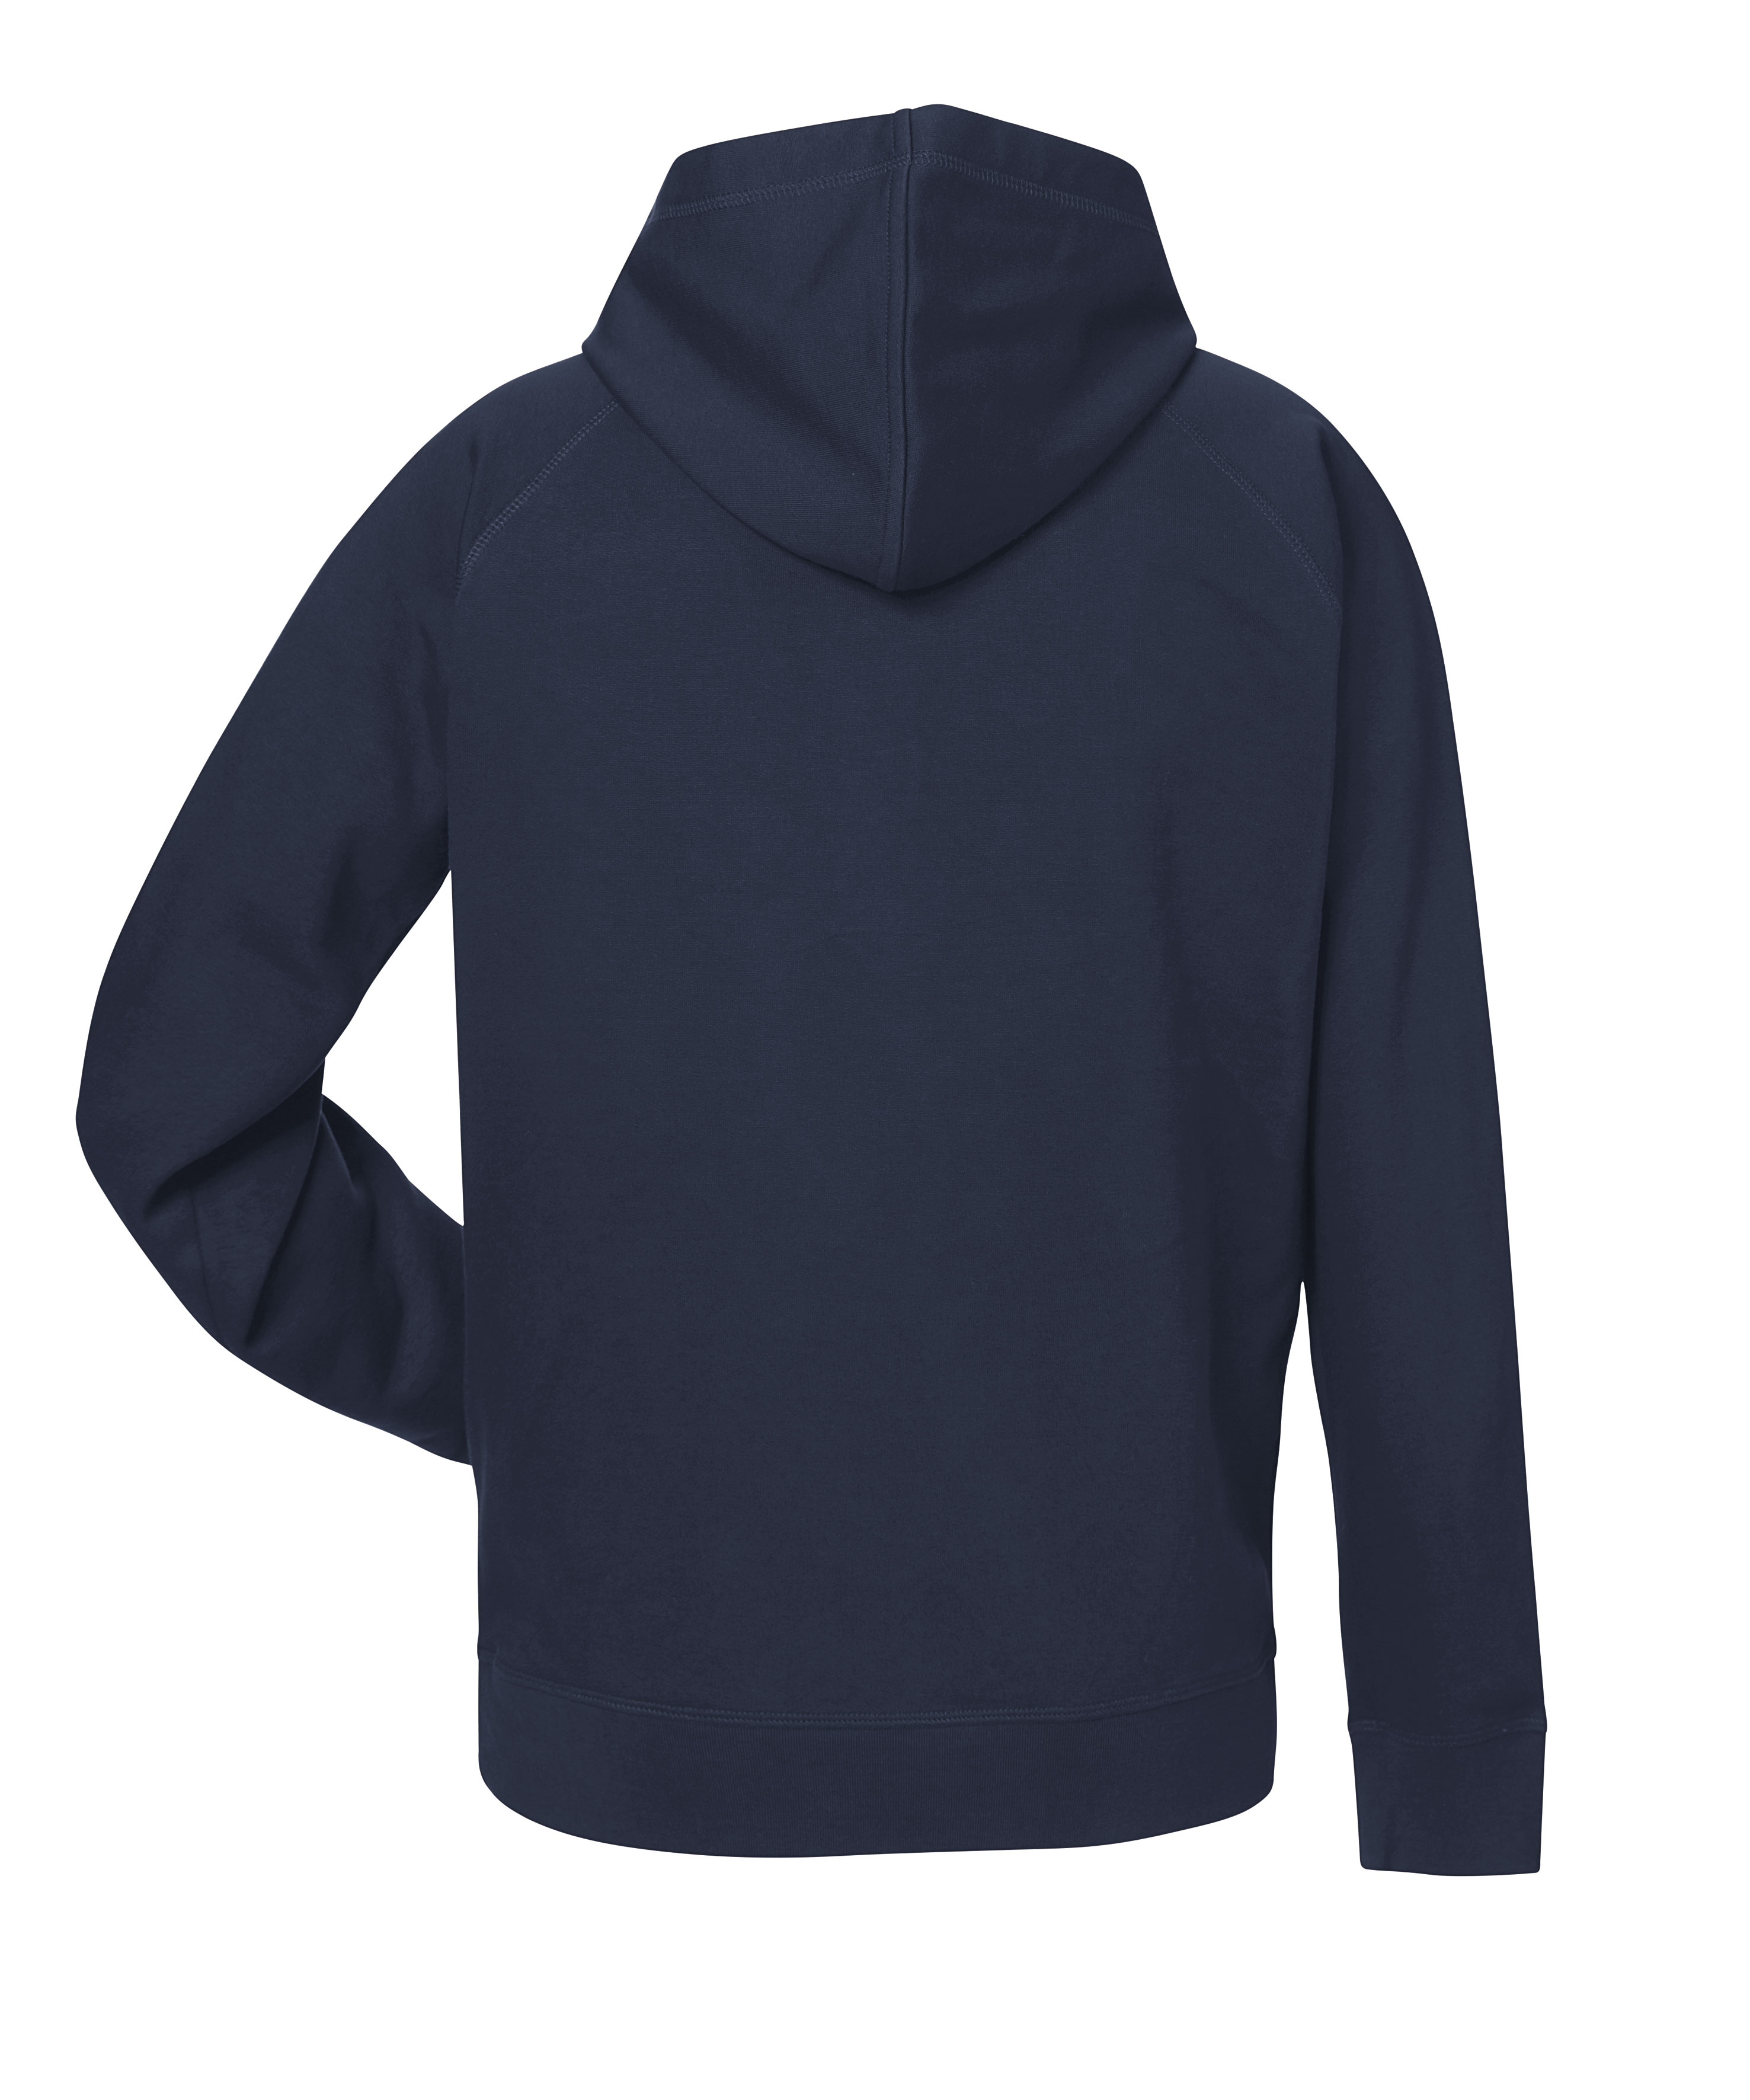 Unisex hoodie "Cologne"